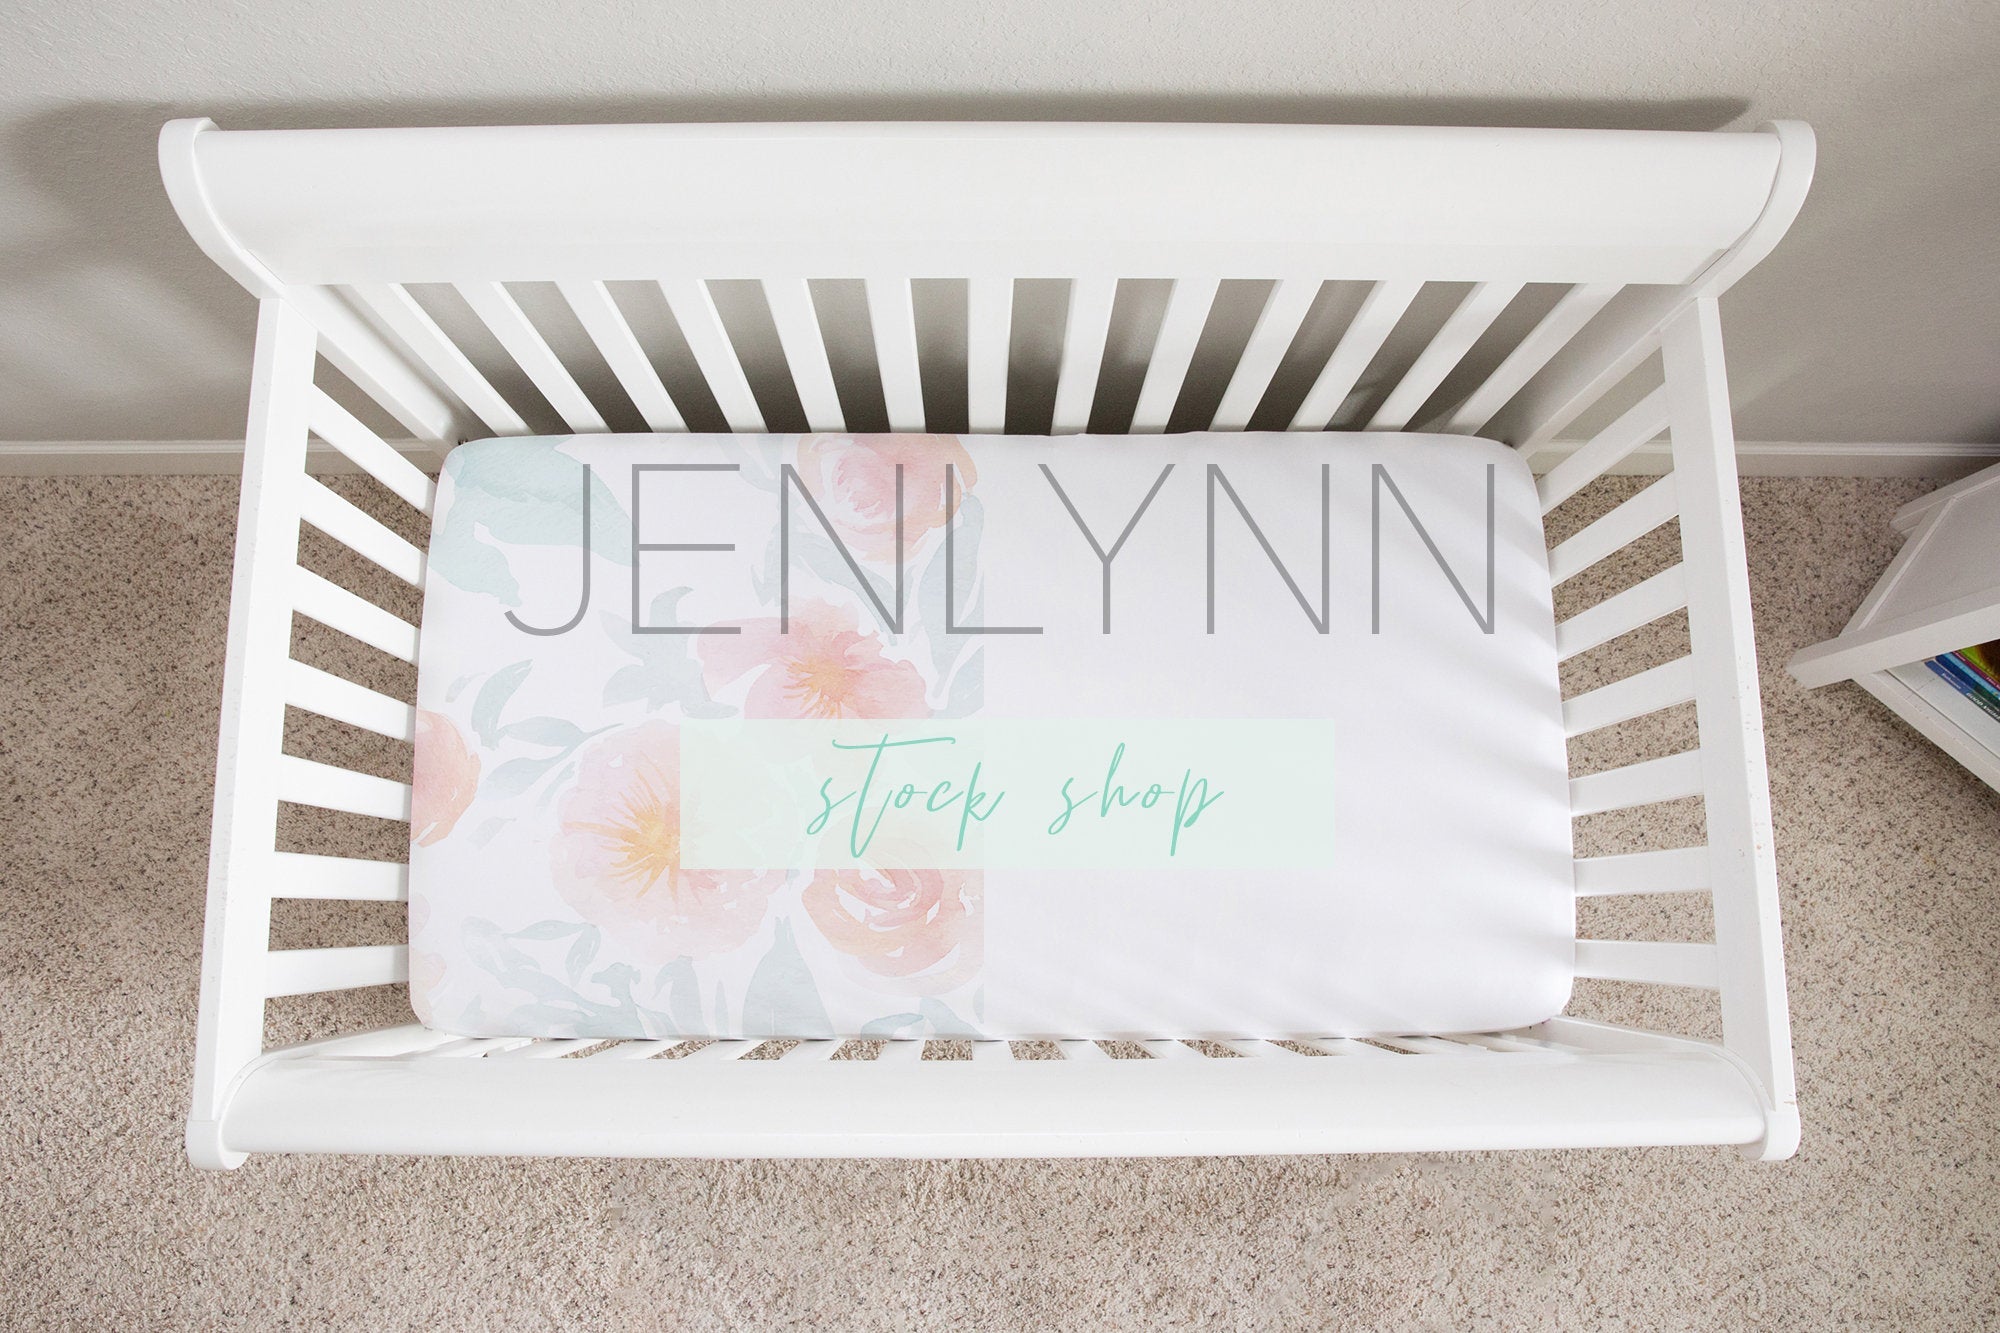 Crib Sheets Jenlynn Stock Shop